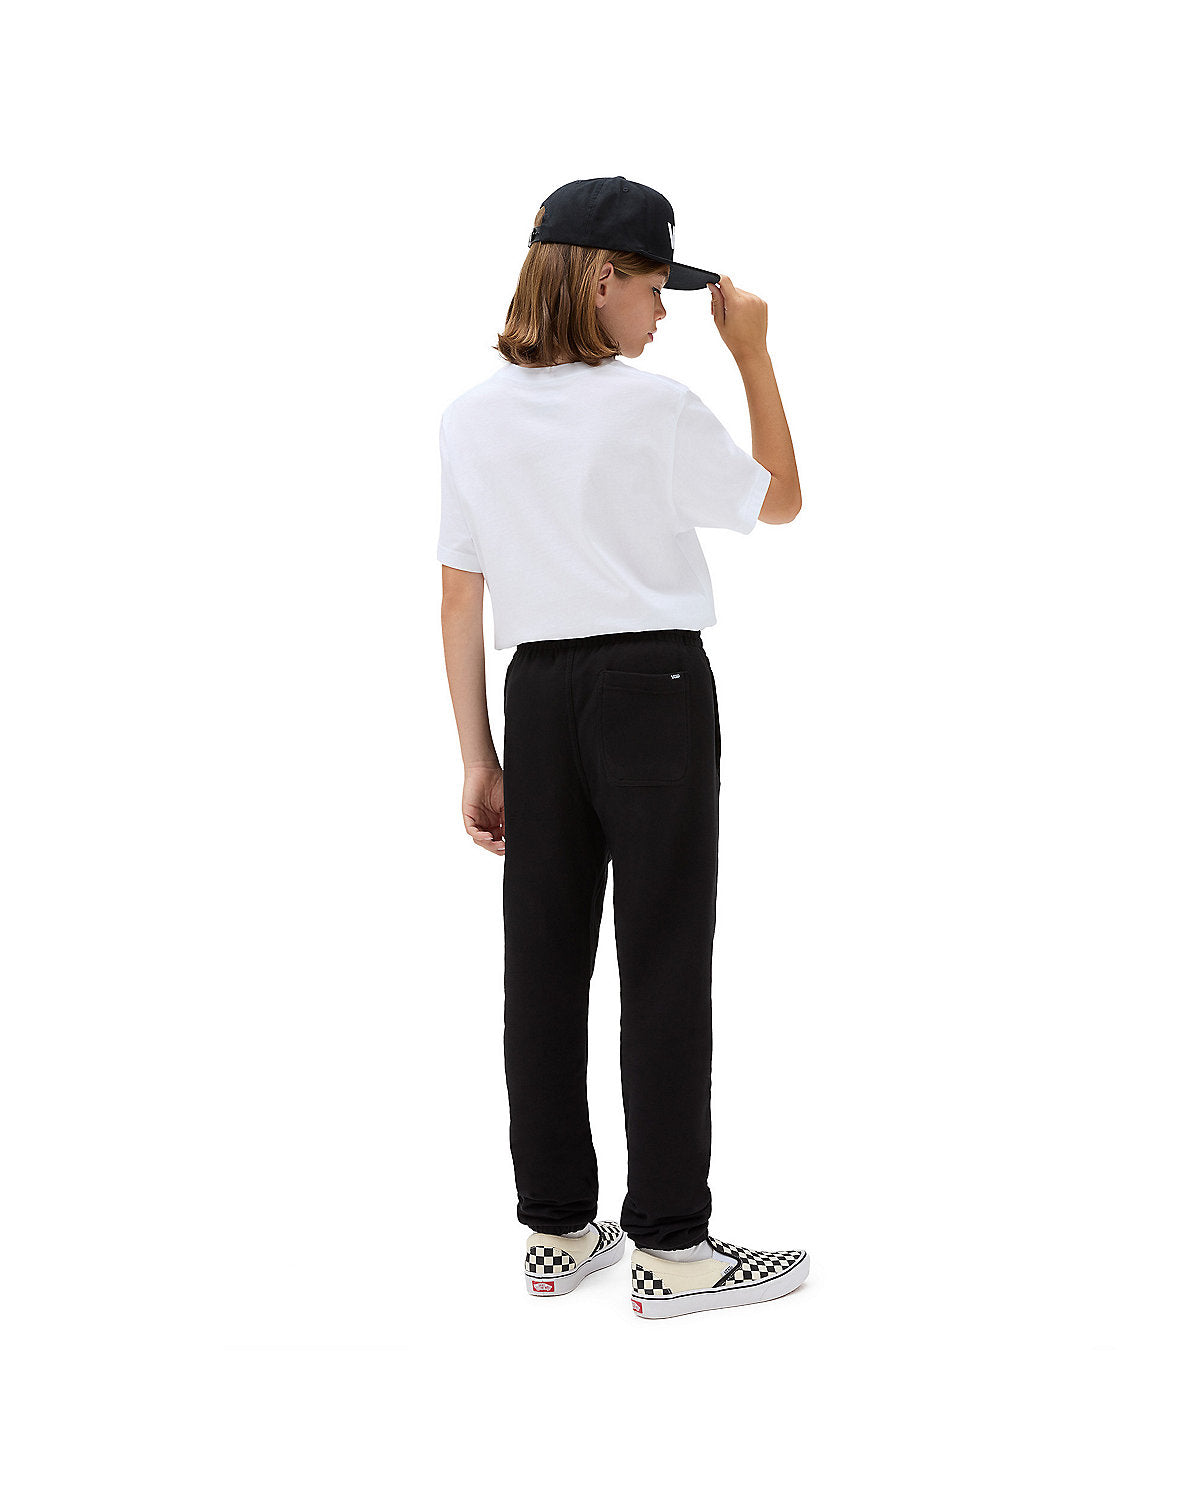 VANS Kids Core Basic Fleece Pant - Black